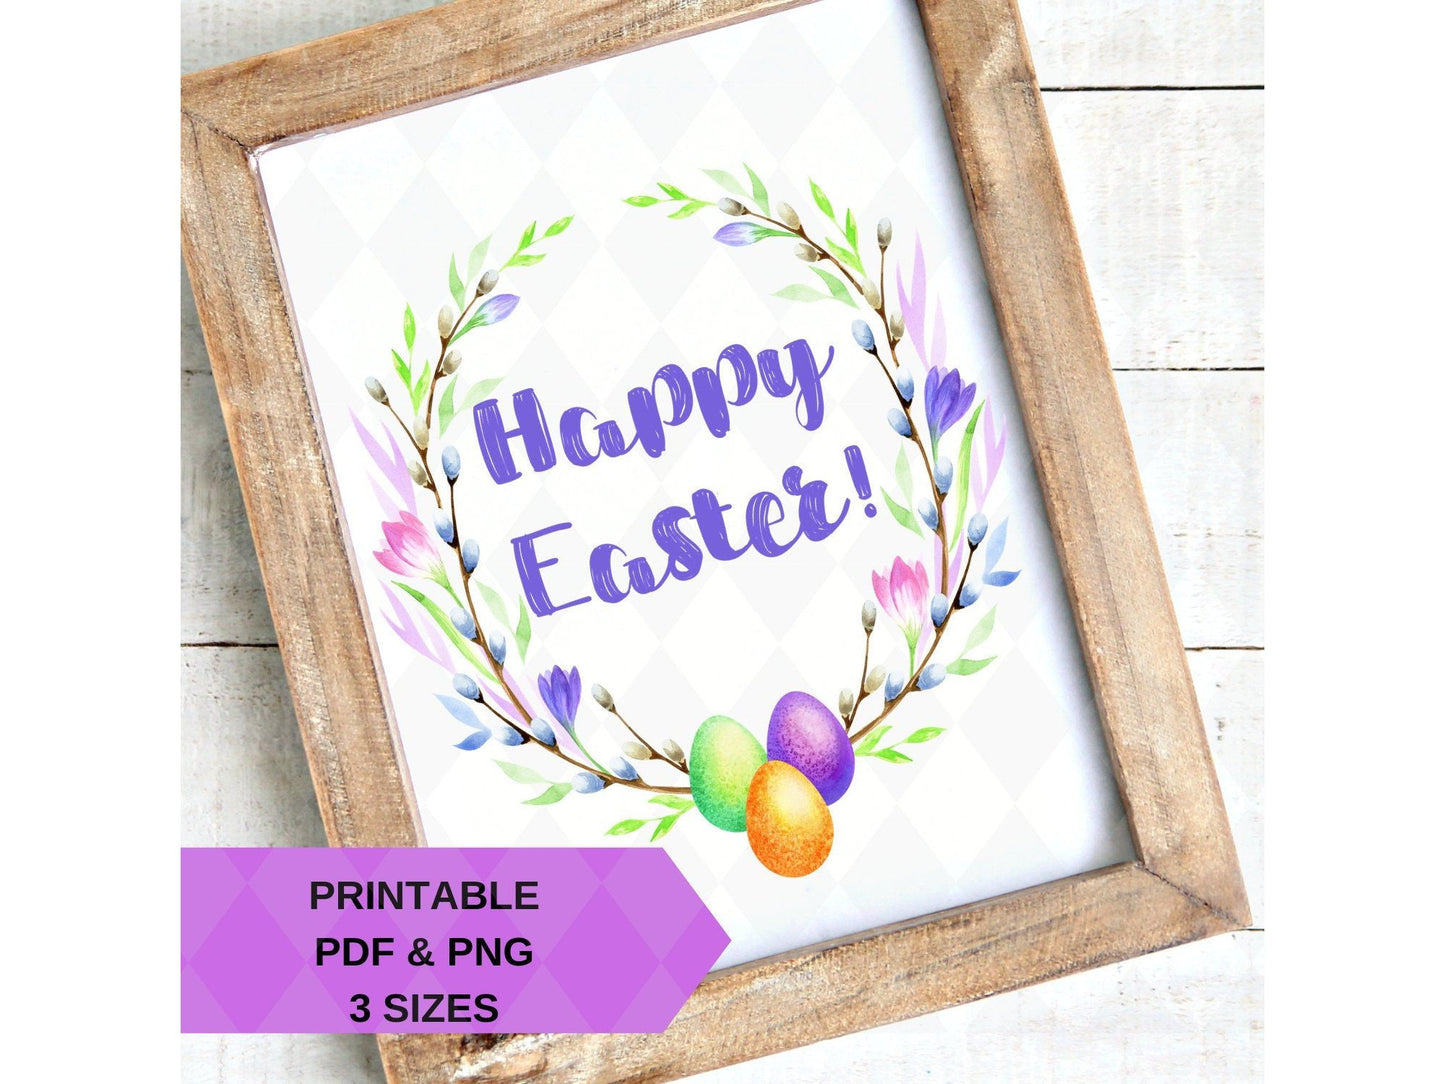 Easter Decoration - Printable Easter Egg Floral Wreath Decor Clip Art Files - Instant Download - DIY Easter Decor, Shirts, Gifts Sublimation